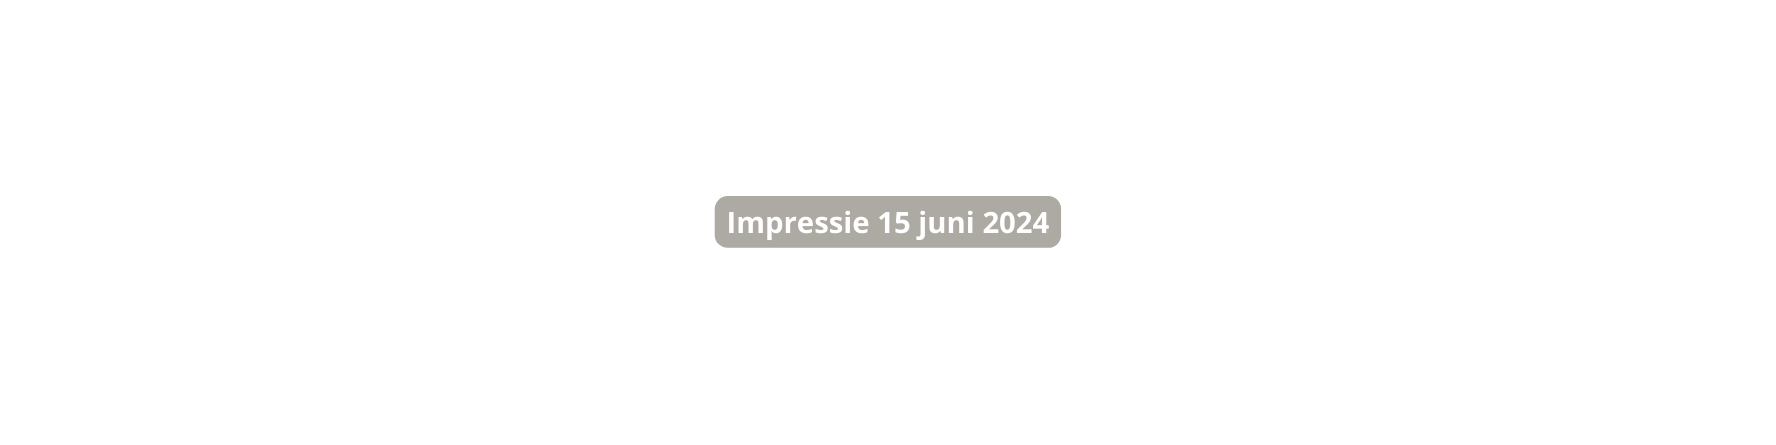 Impressie 15 juni 2024